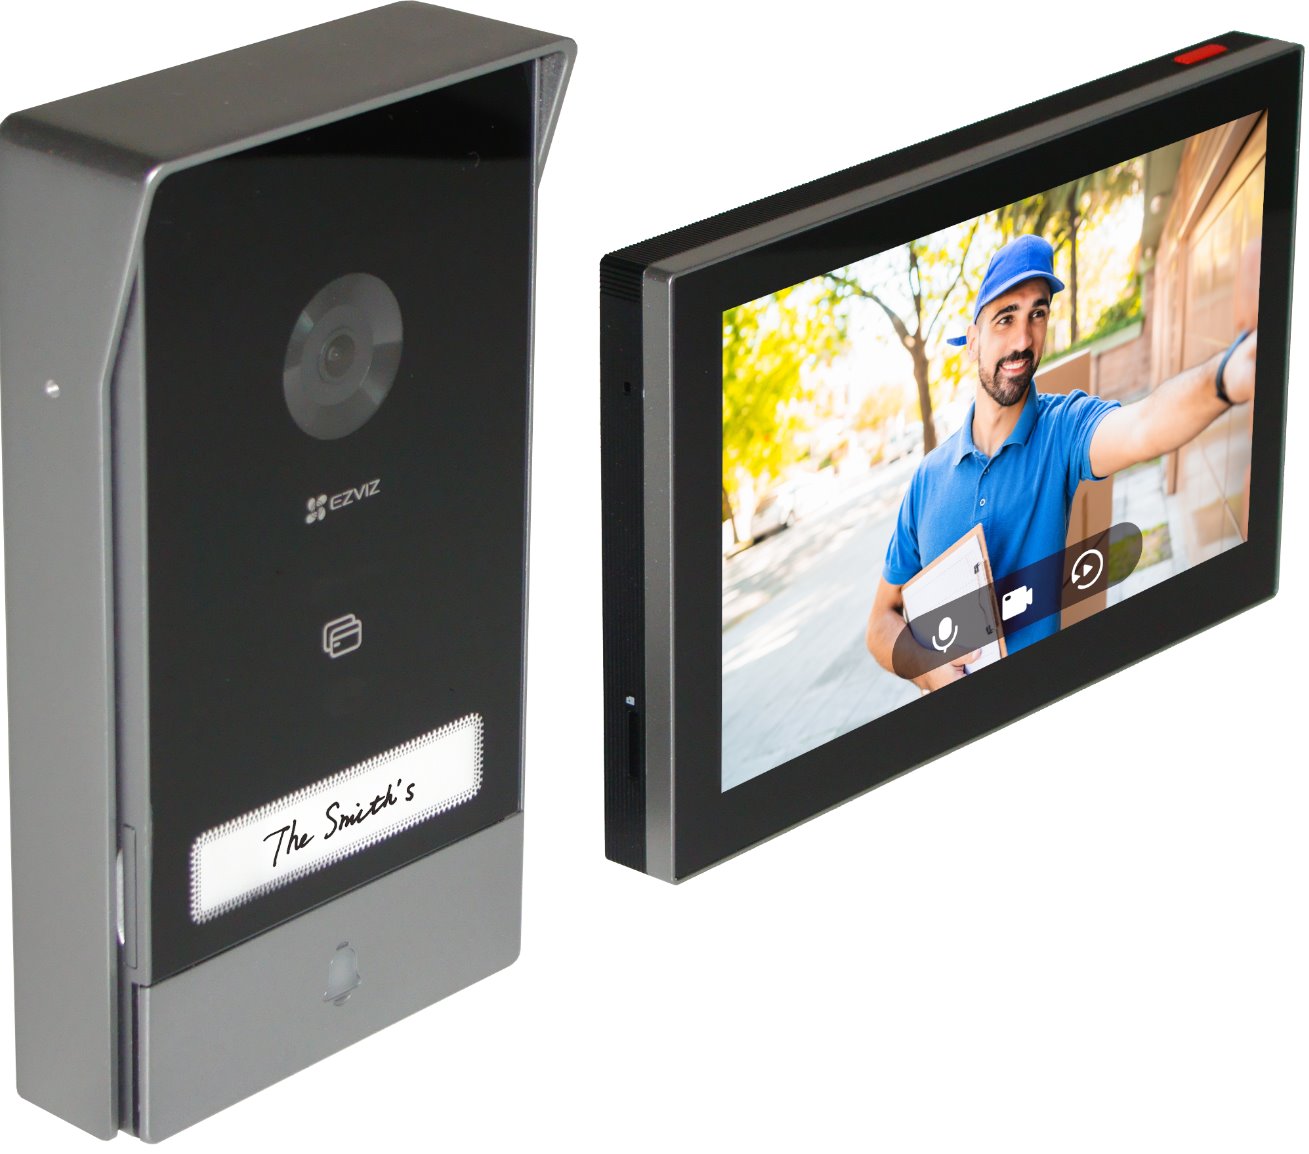 Sotel  EZVIZ HP7 video intercom system 17.8 cm (7) Black, Silver